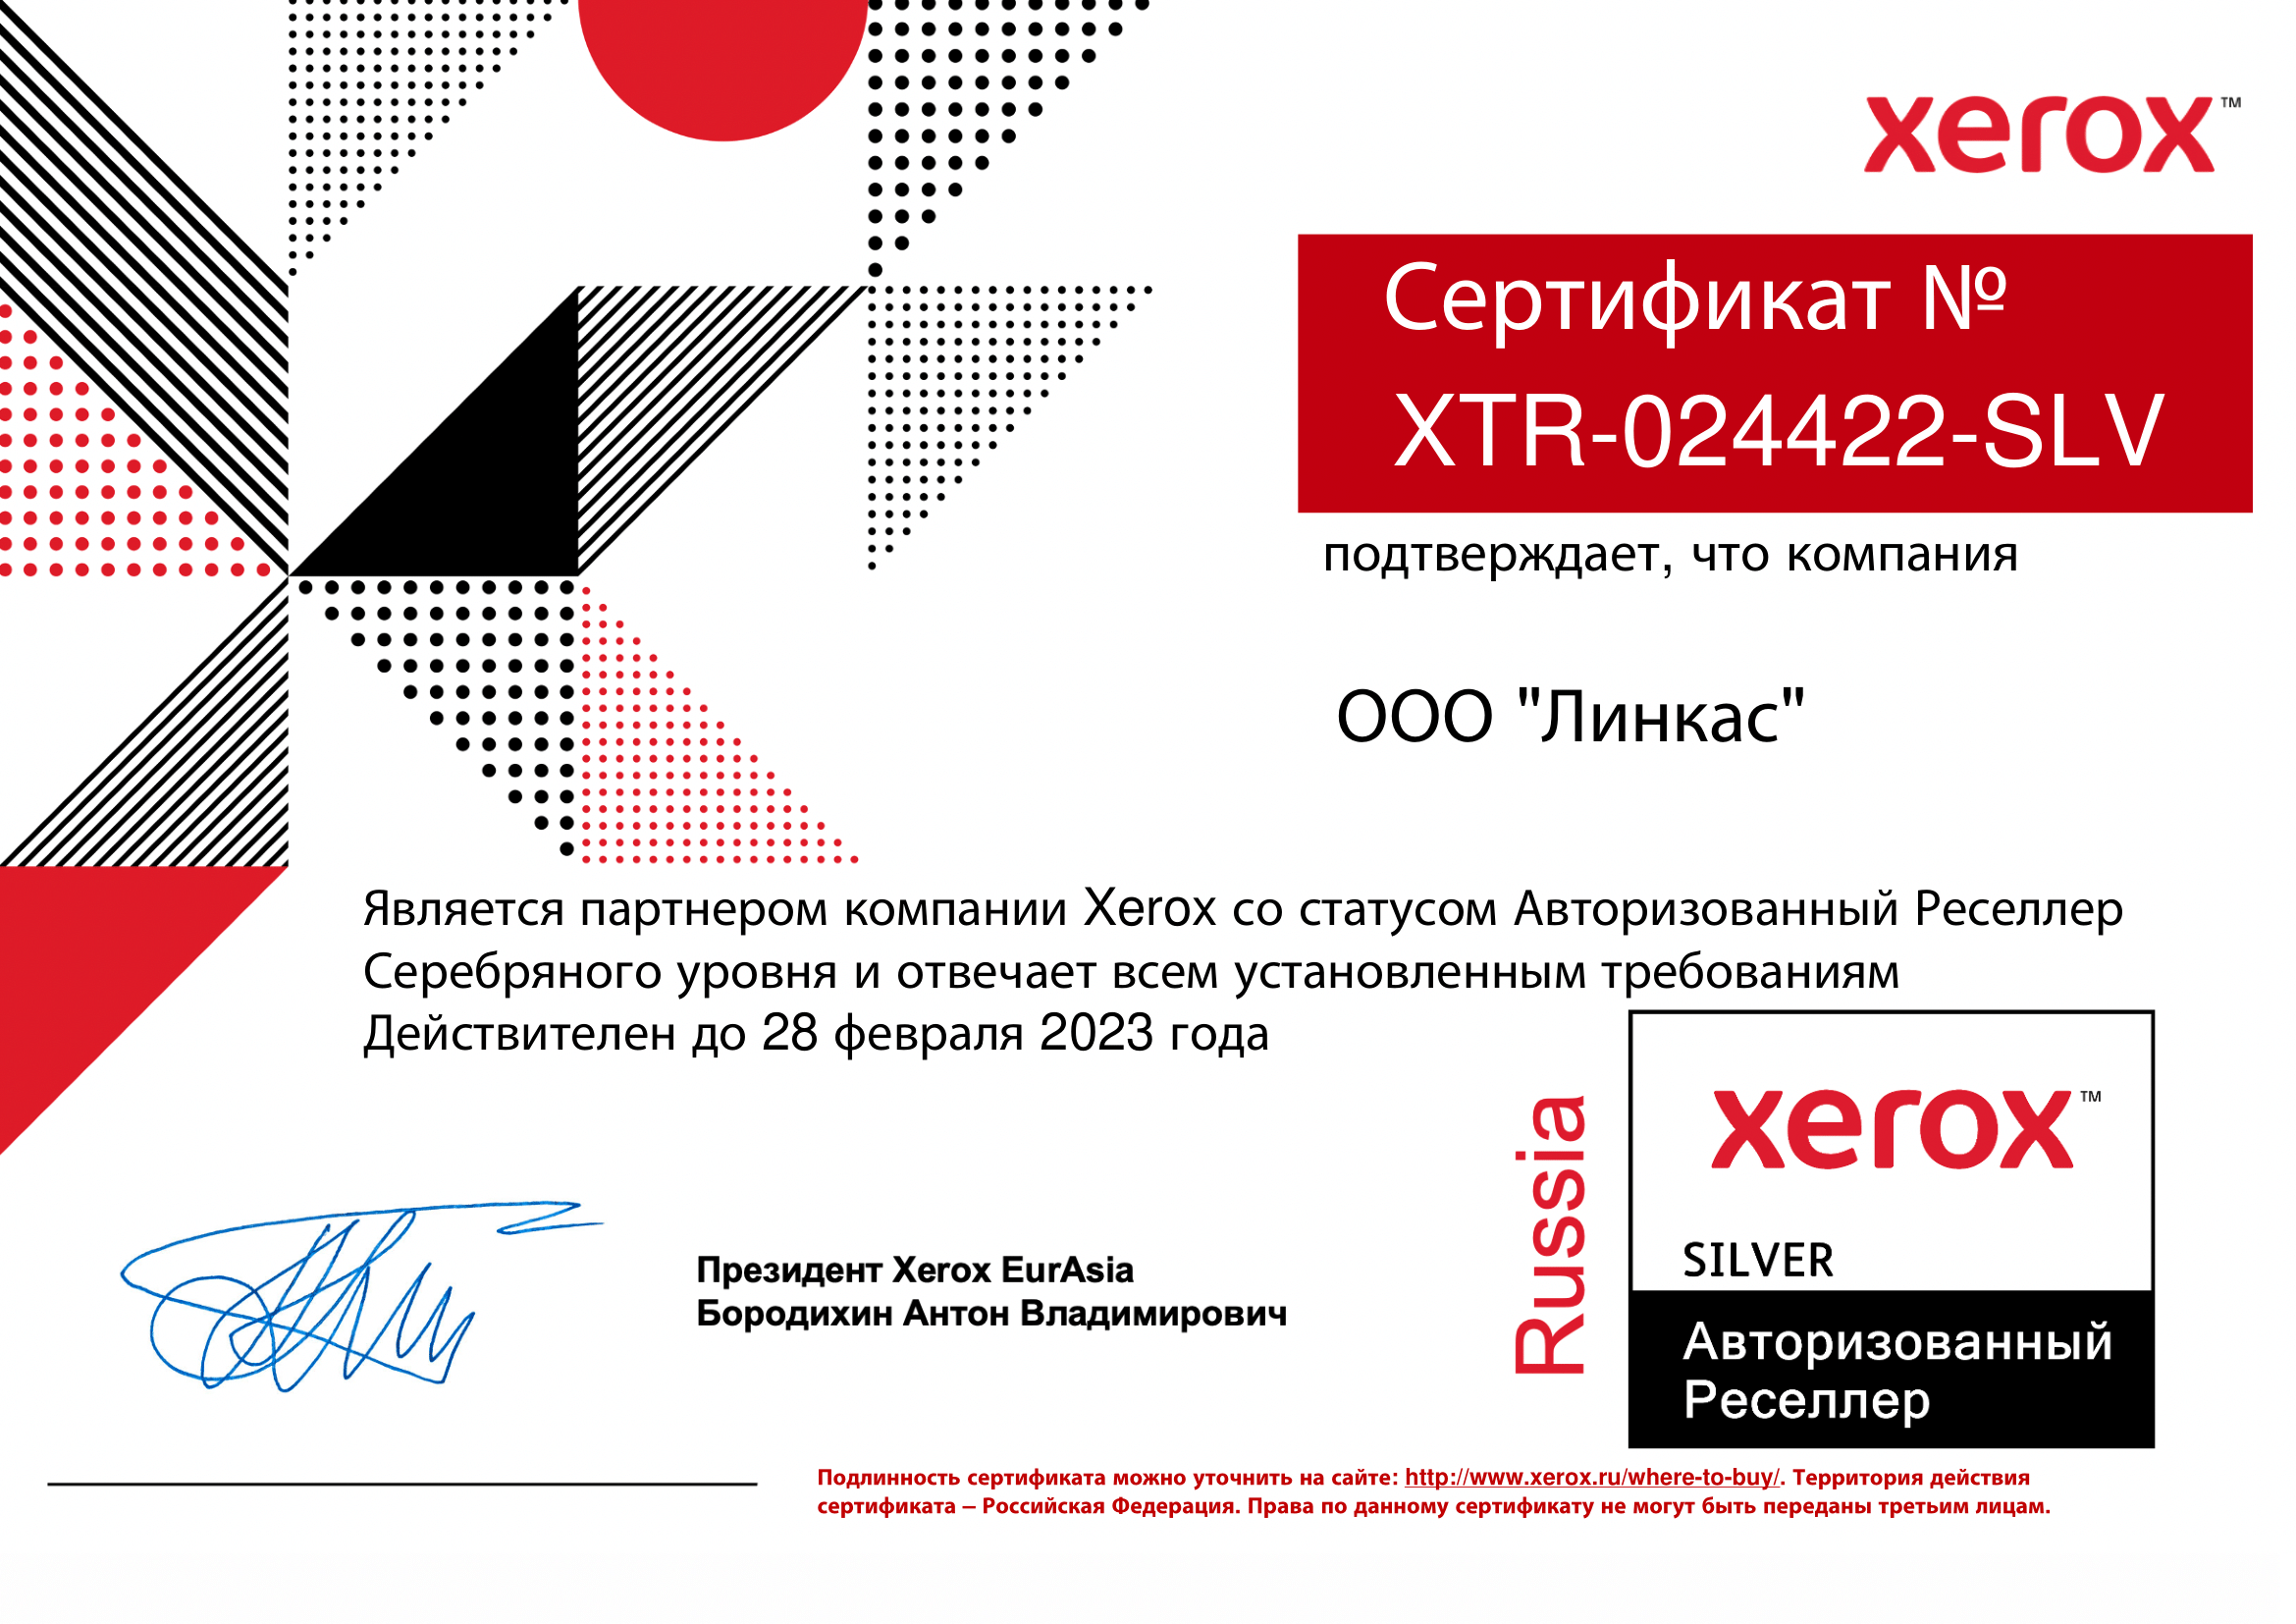 Компания Линкас бизнес партнер Xerox